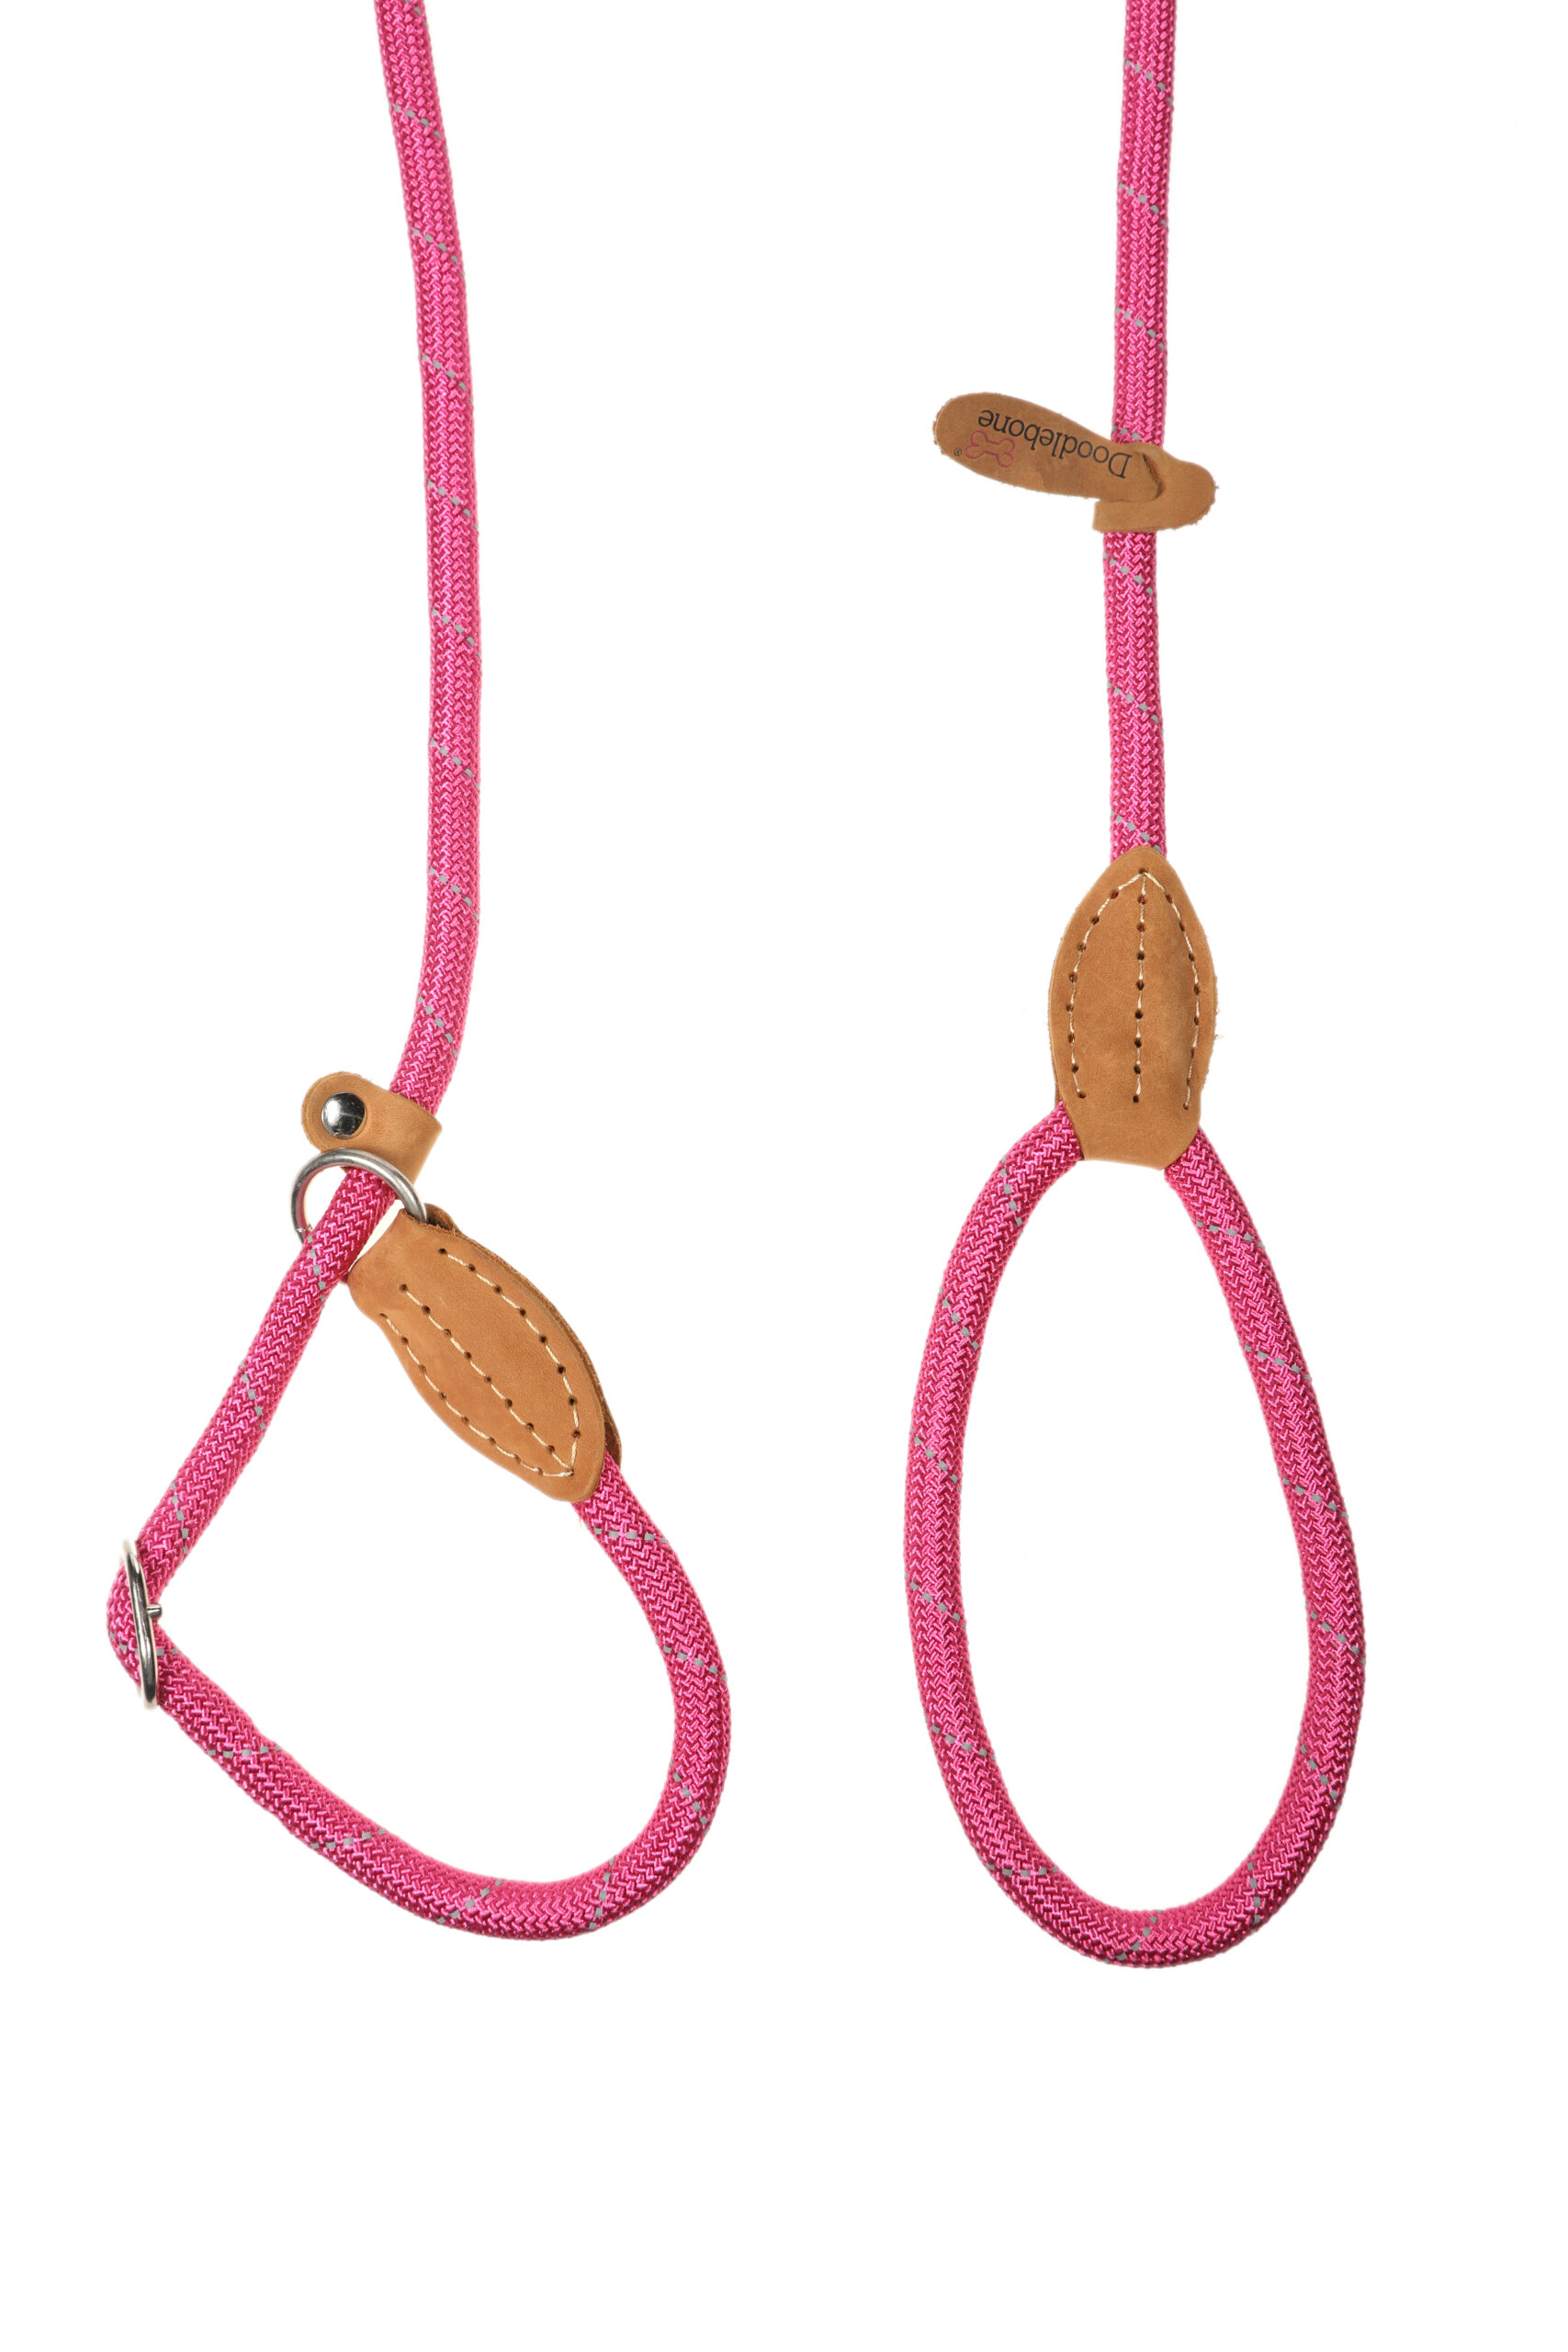 Doodlebone Originals Bright Pink Rope Dog Slip Lead